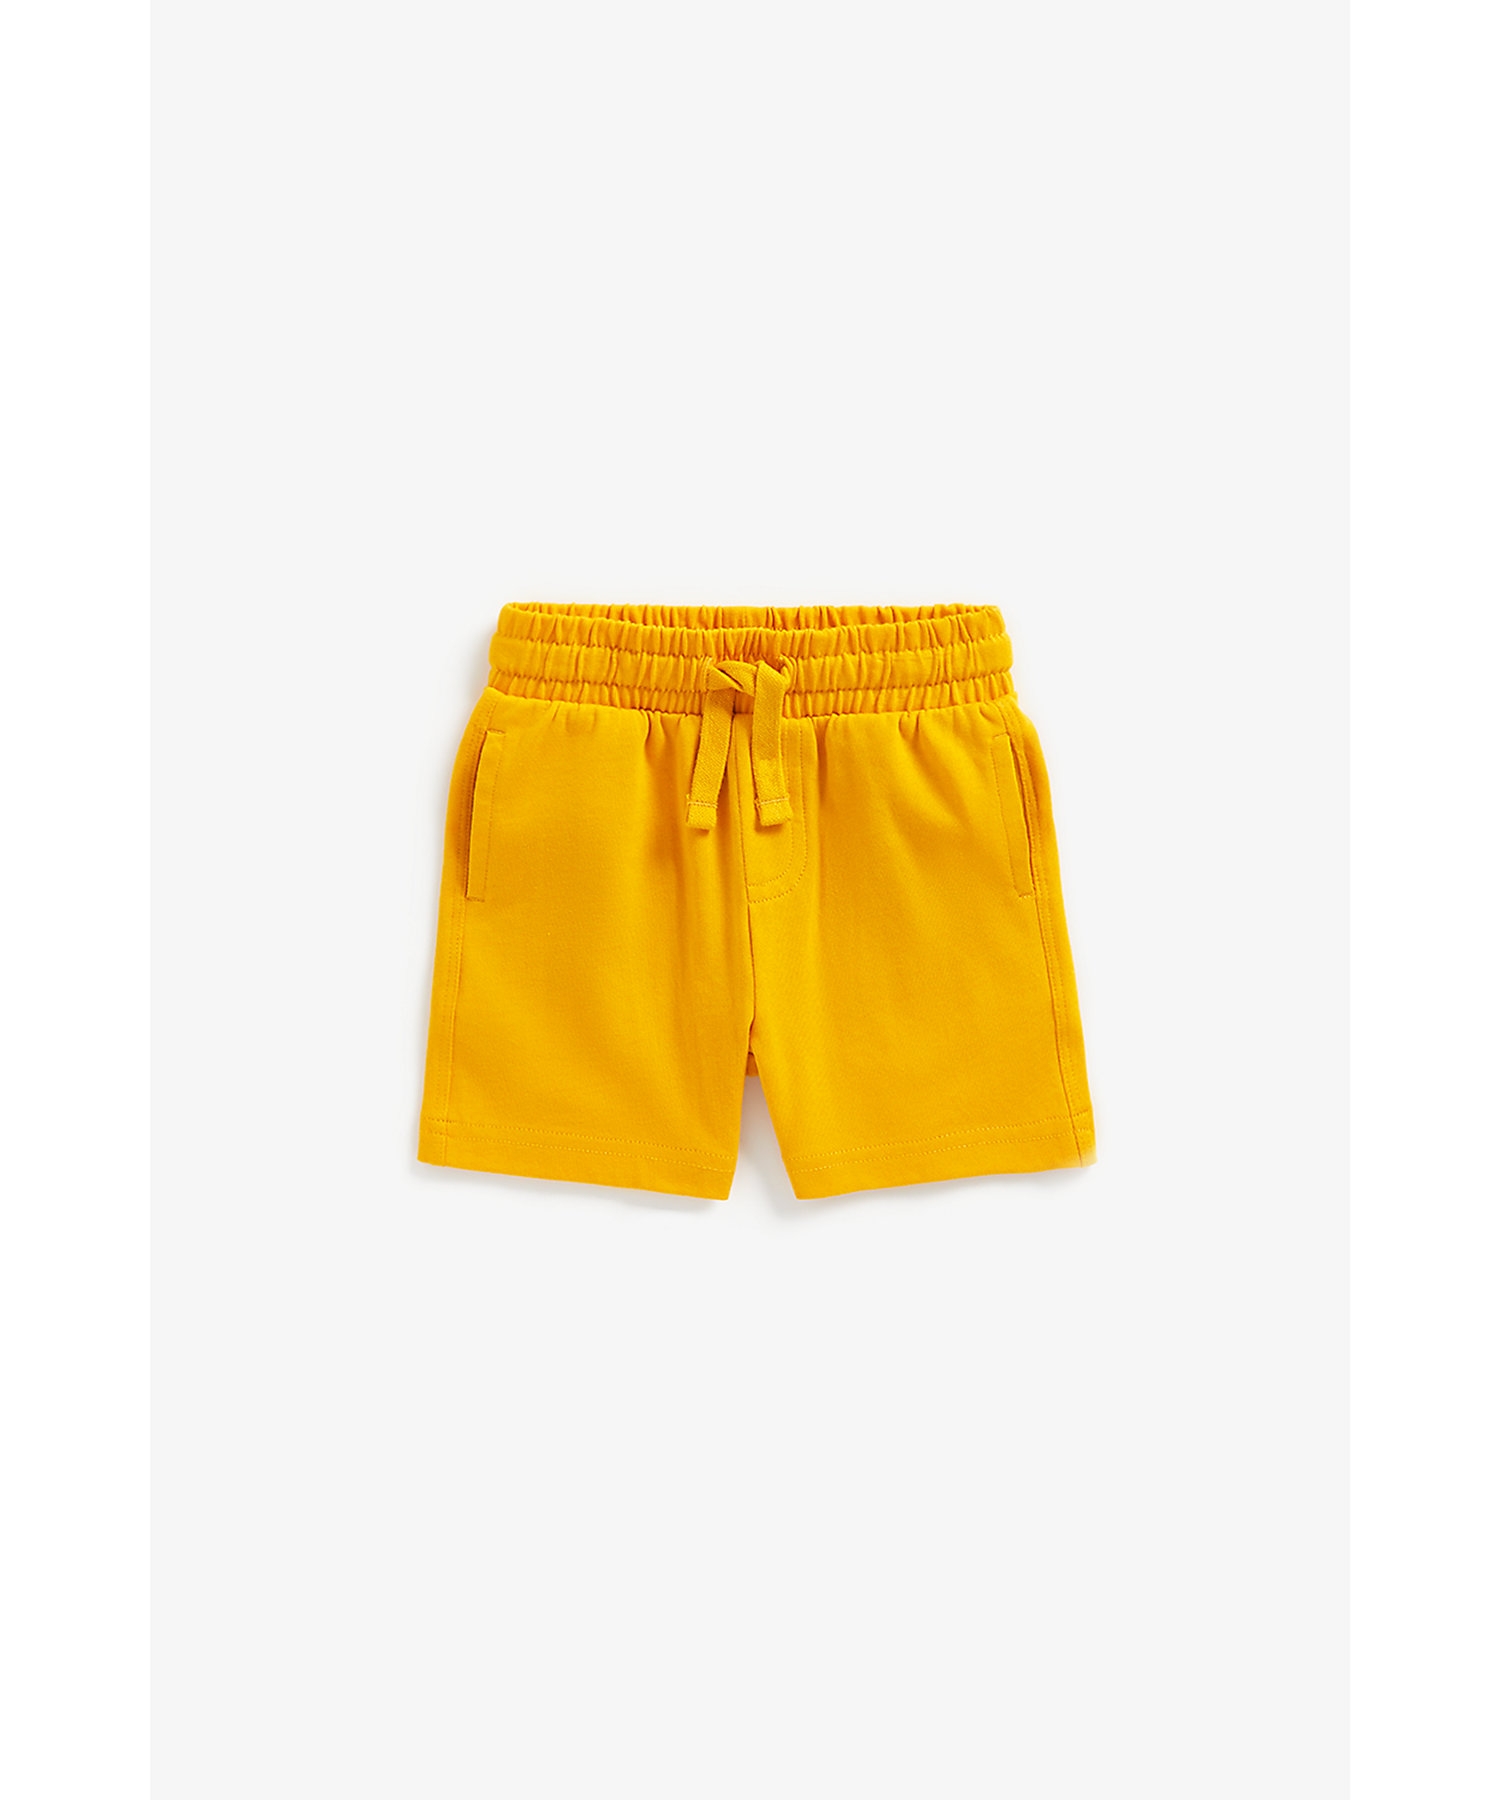 Boys Shorts Side Pocket-Yellow